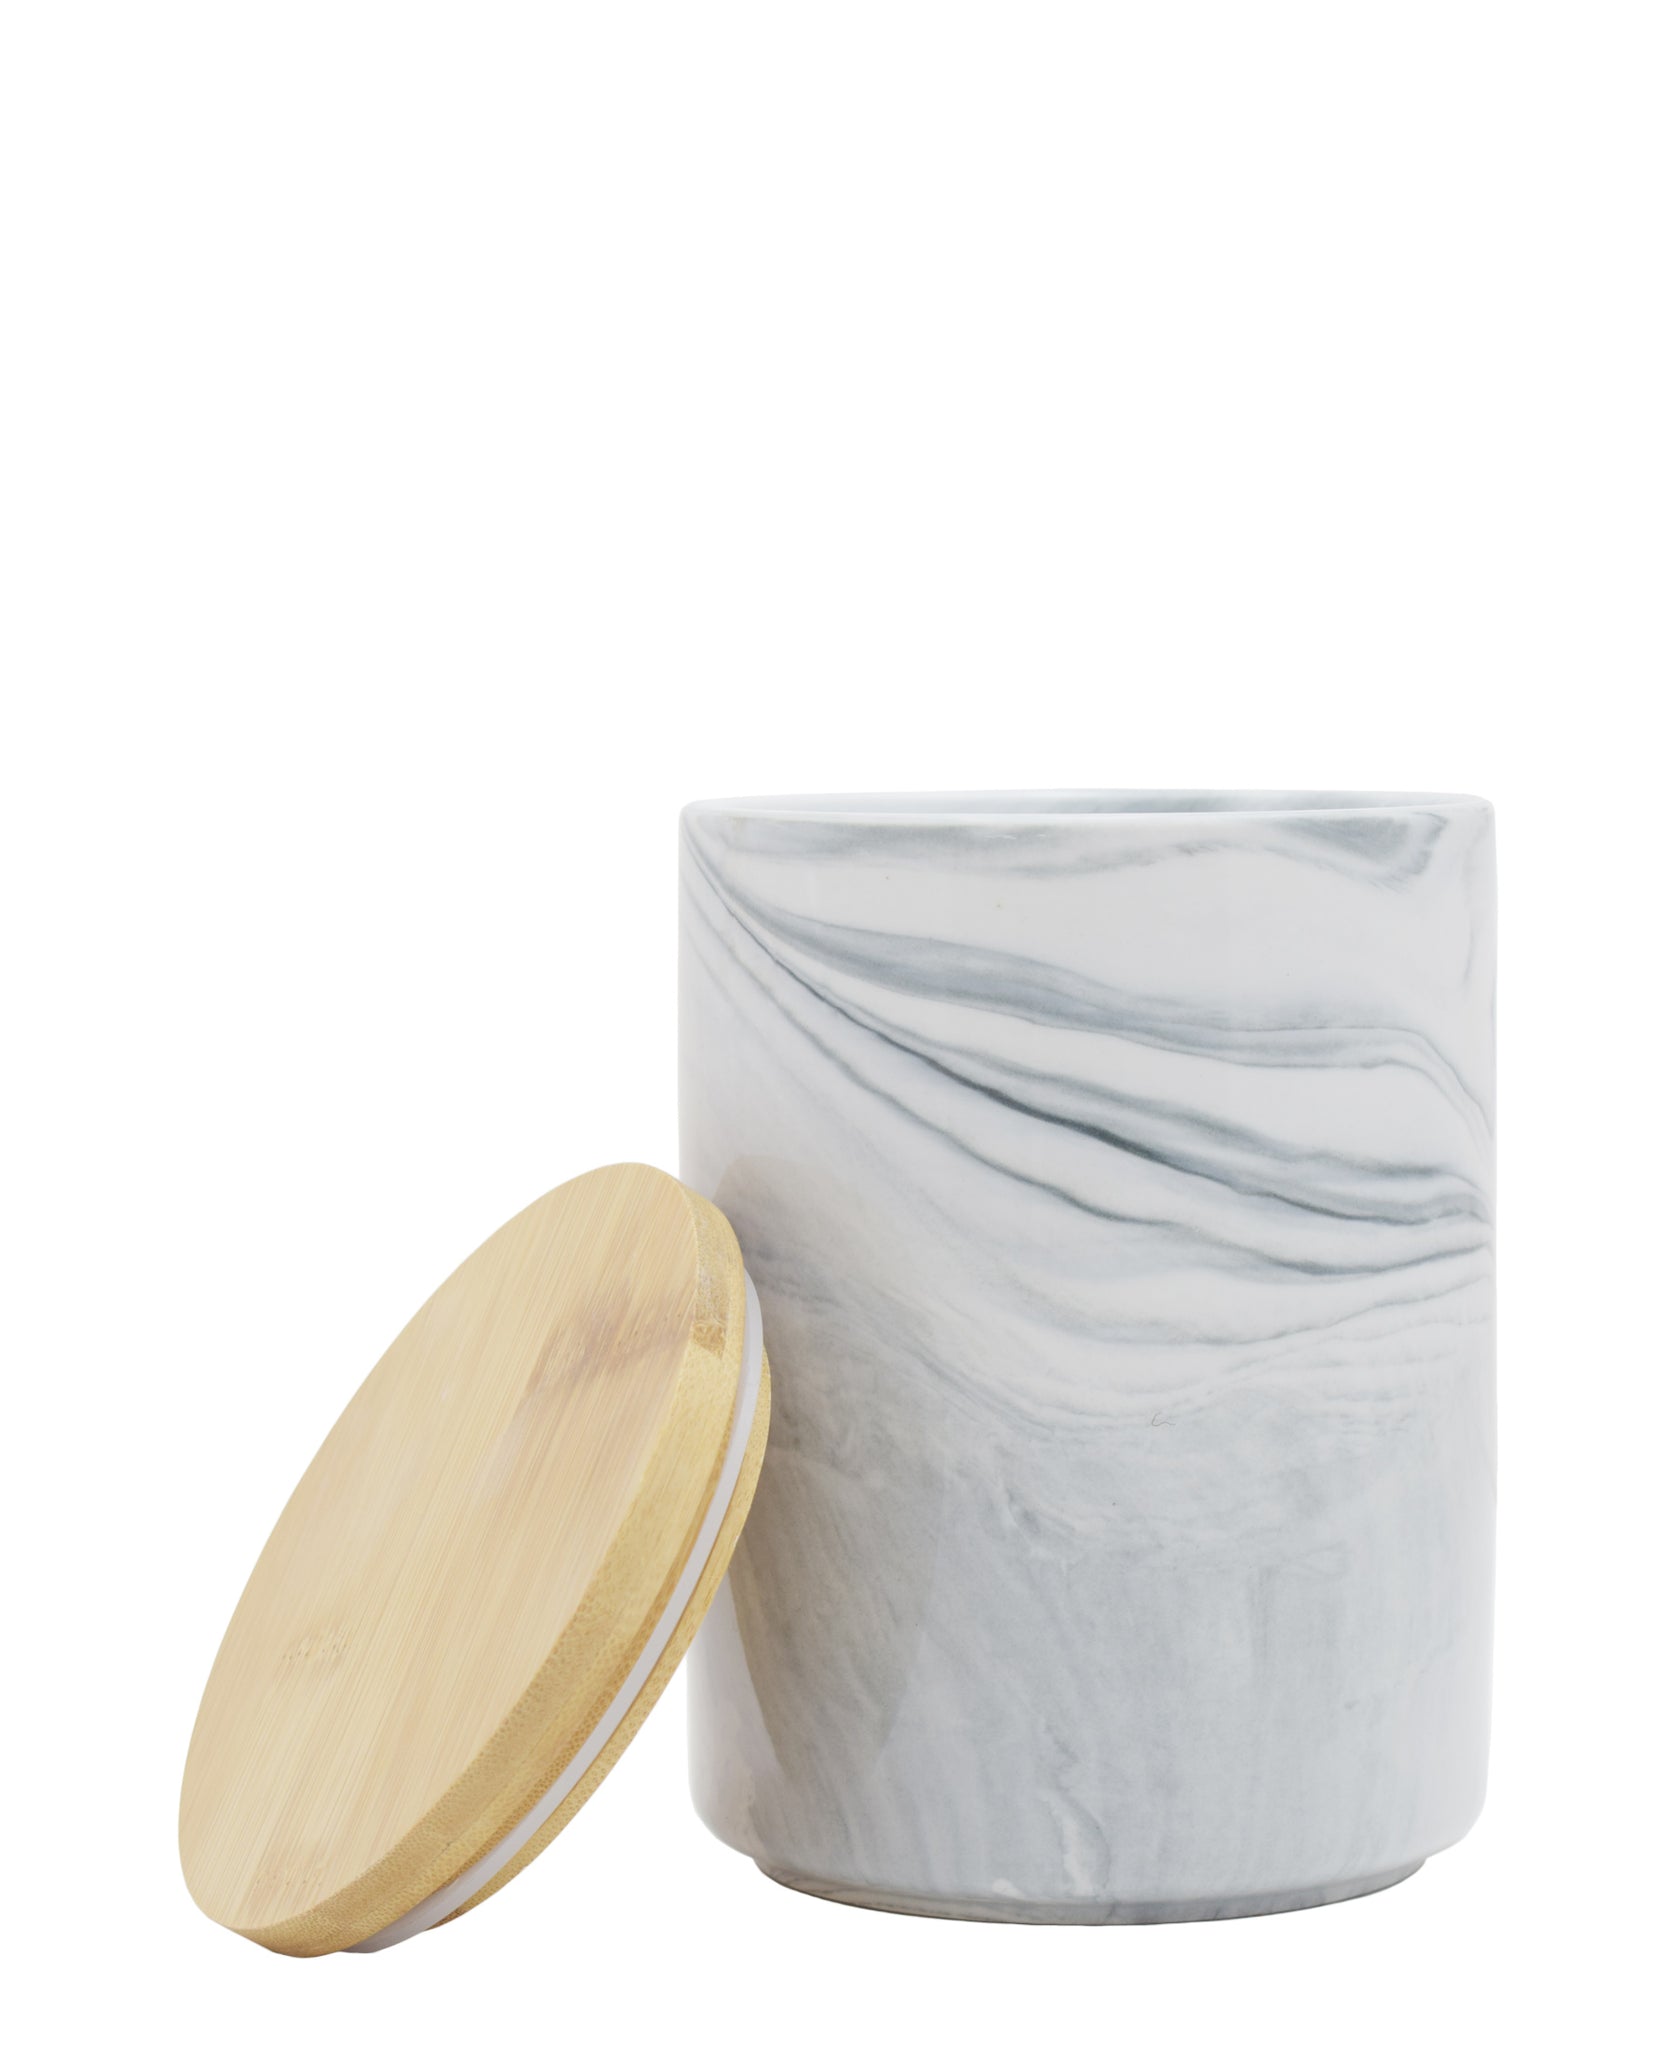 Ciroa Marble Canister White & Grey - Medium